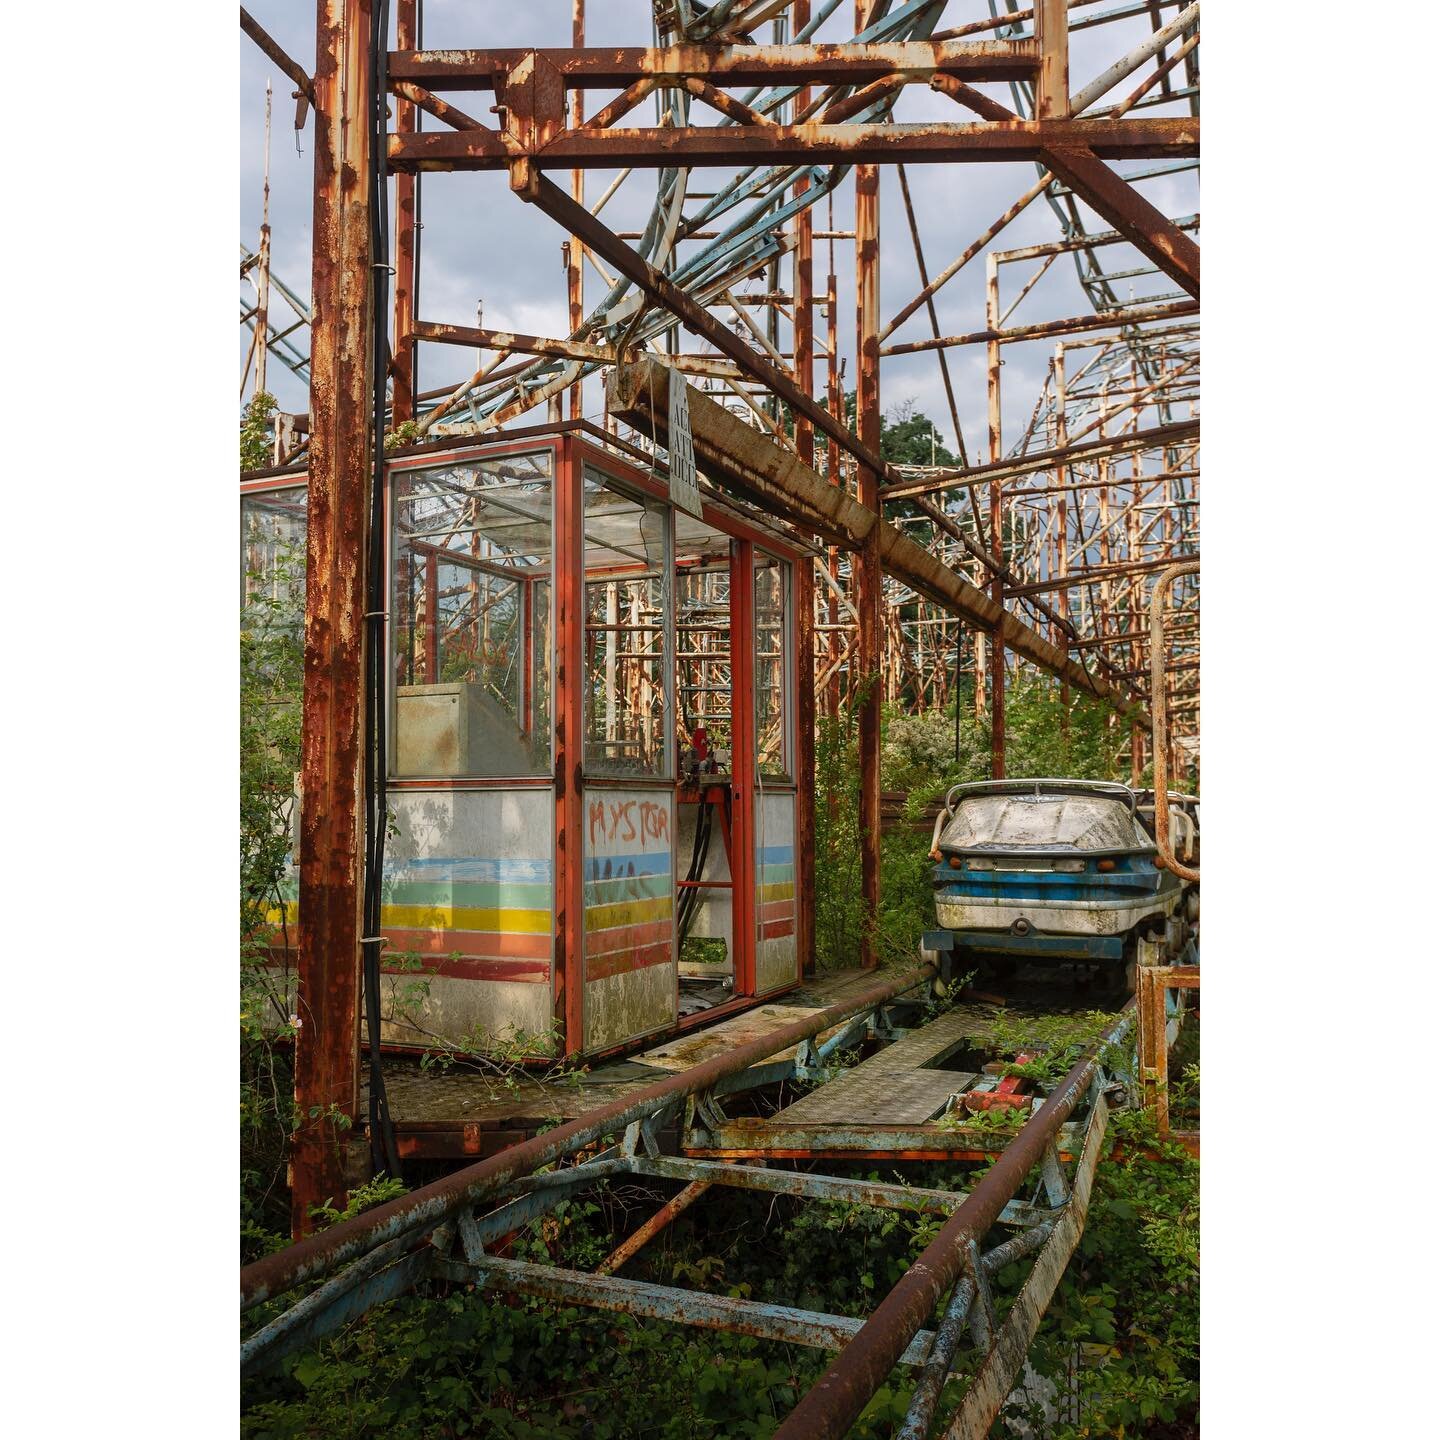 Rollercoaster, Italy
.
#urbex #abandoned #urbanexploration #realgoodmag #oftheafternoon #yetmagazine #imaginarymagnitude #abandonedplaces #somewheremag #theheavycollective #documentingspace #rundownmagazine #urbexphotography  #streetphotography #lost